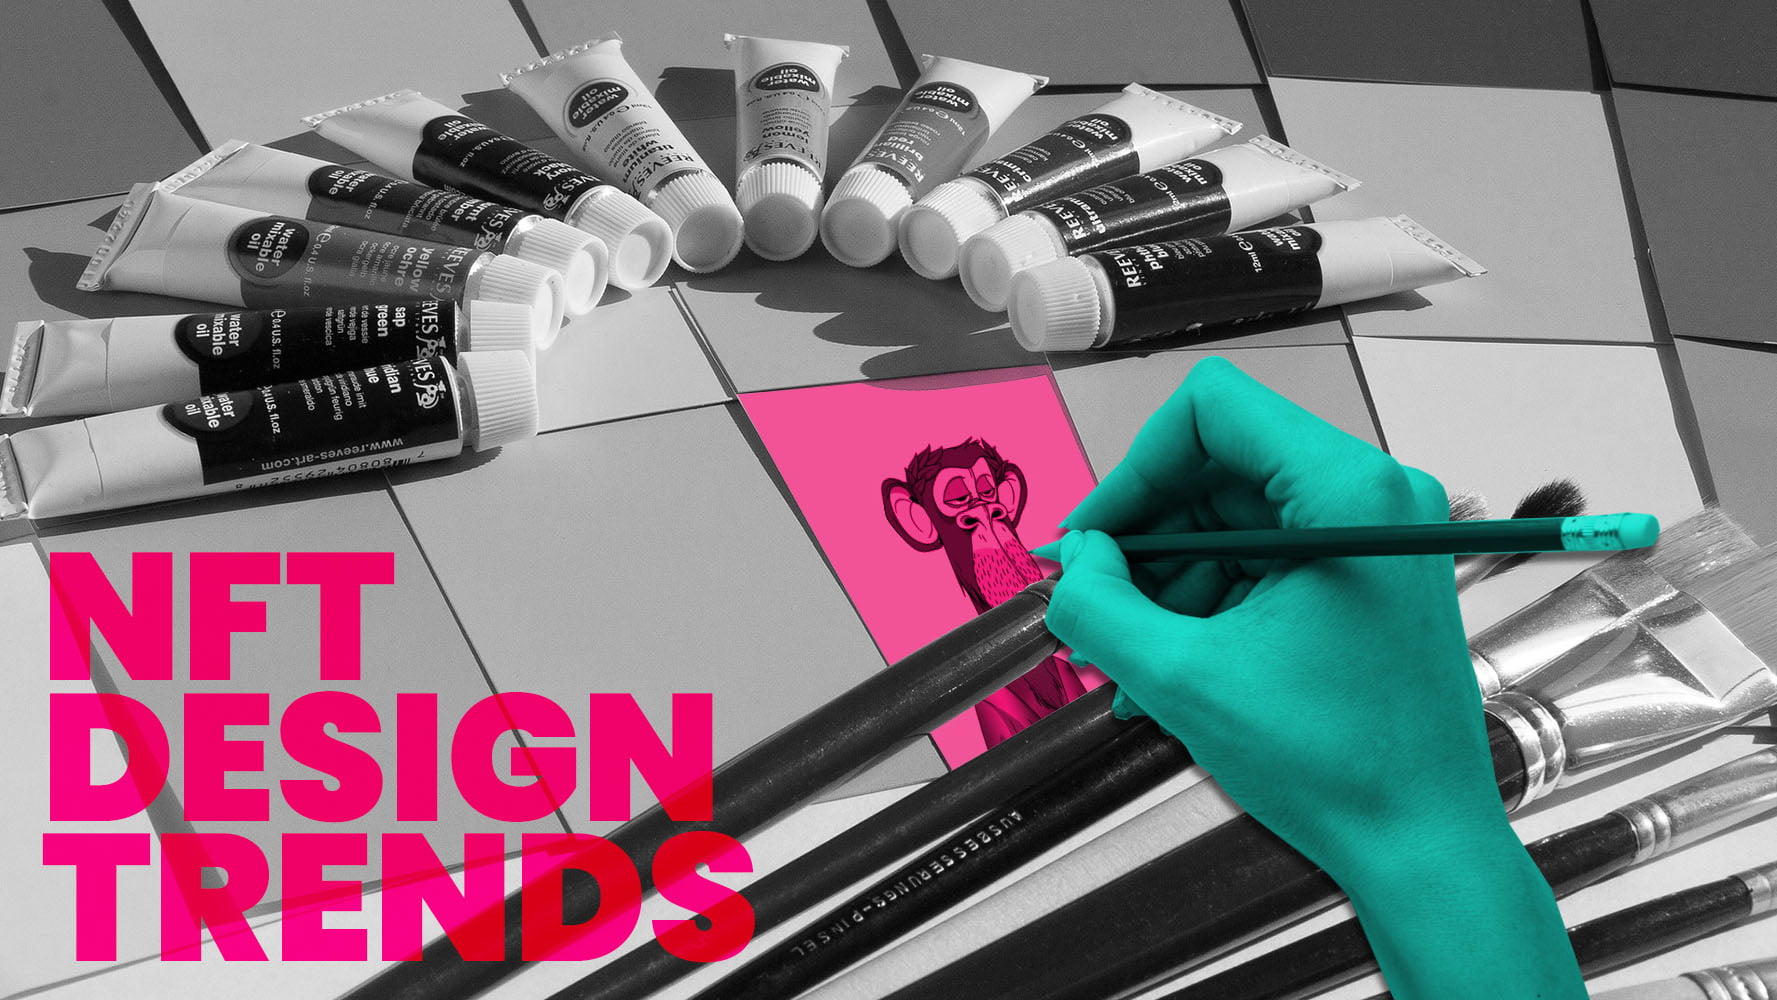 NFT Design Trends: Exploring the Best Latest Styles in Digital Art